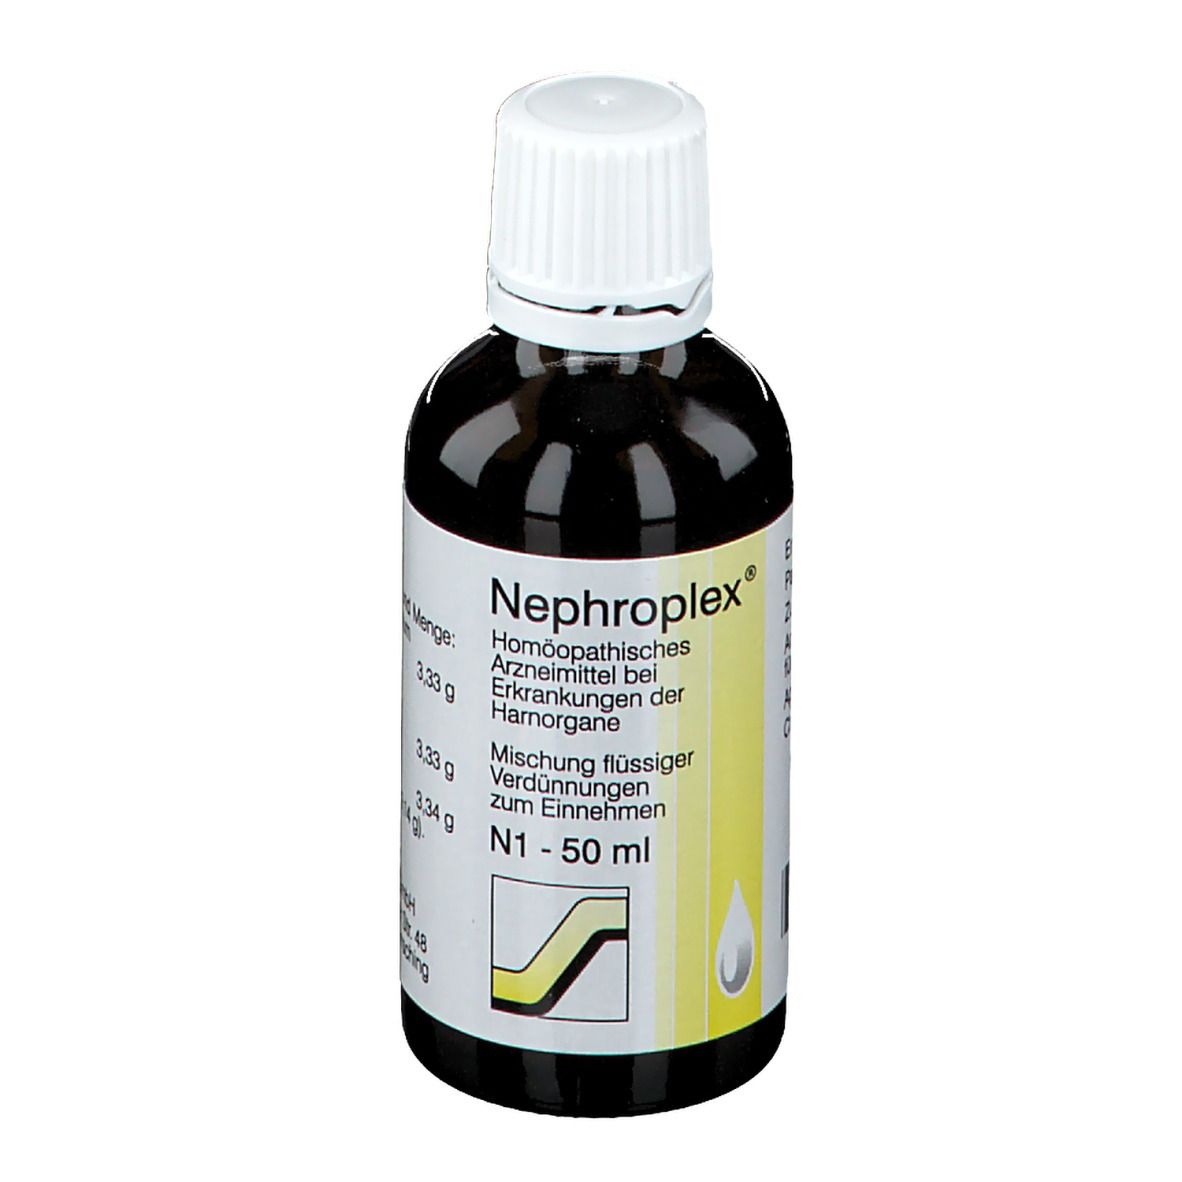 Nephroplex®